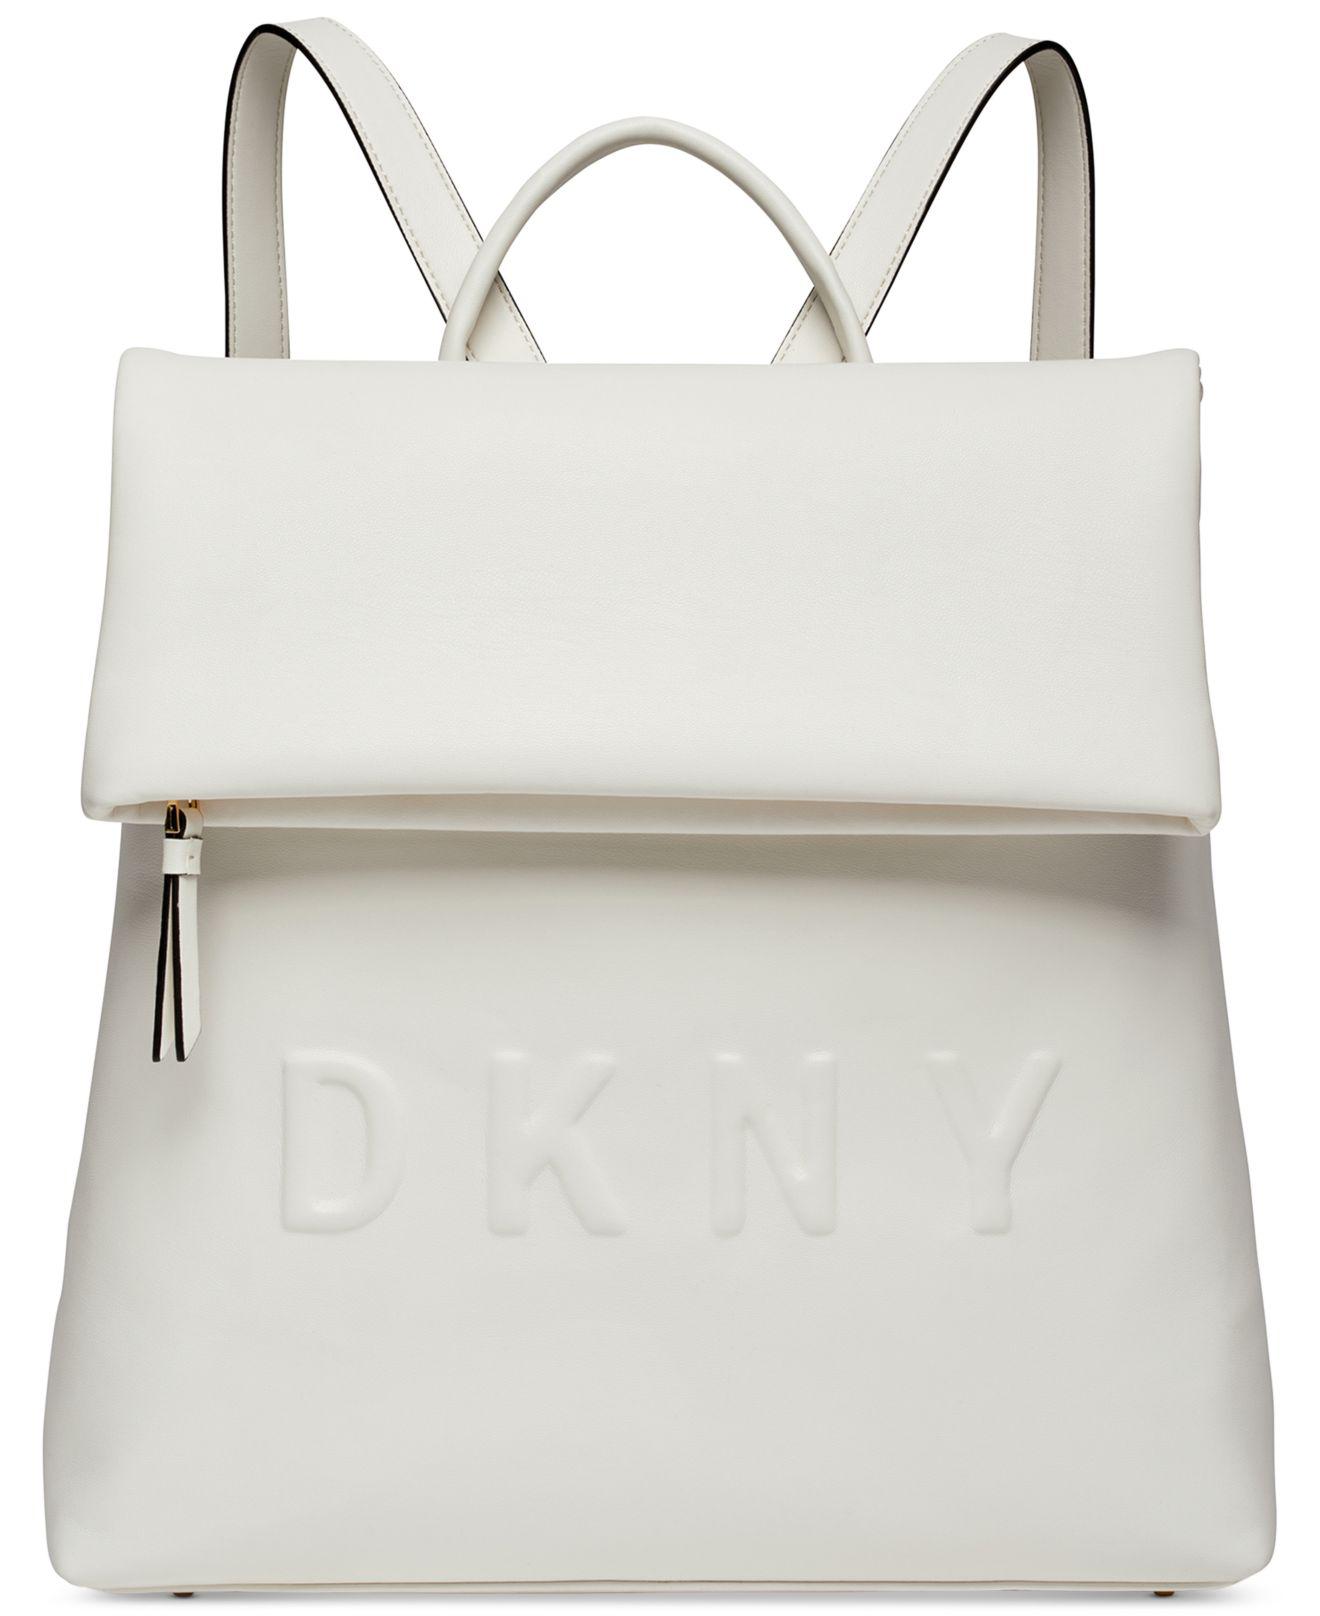 dkny bags white